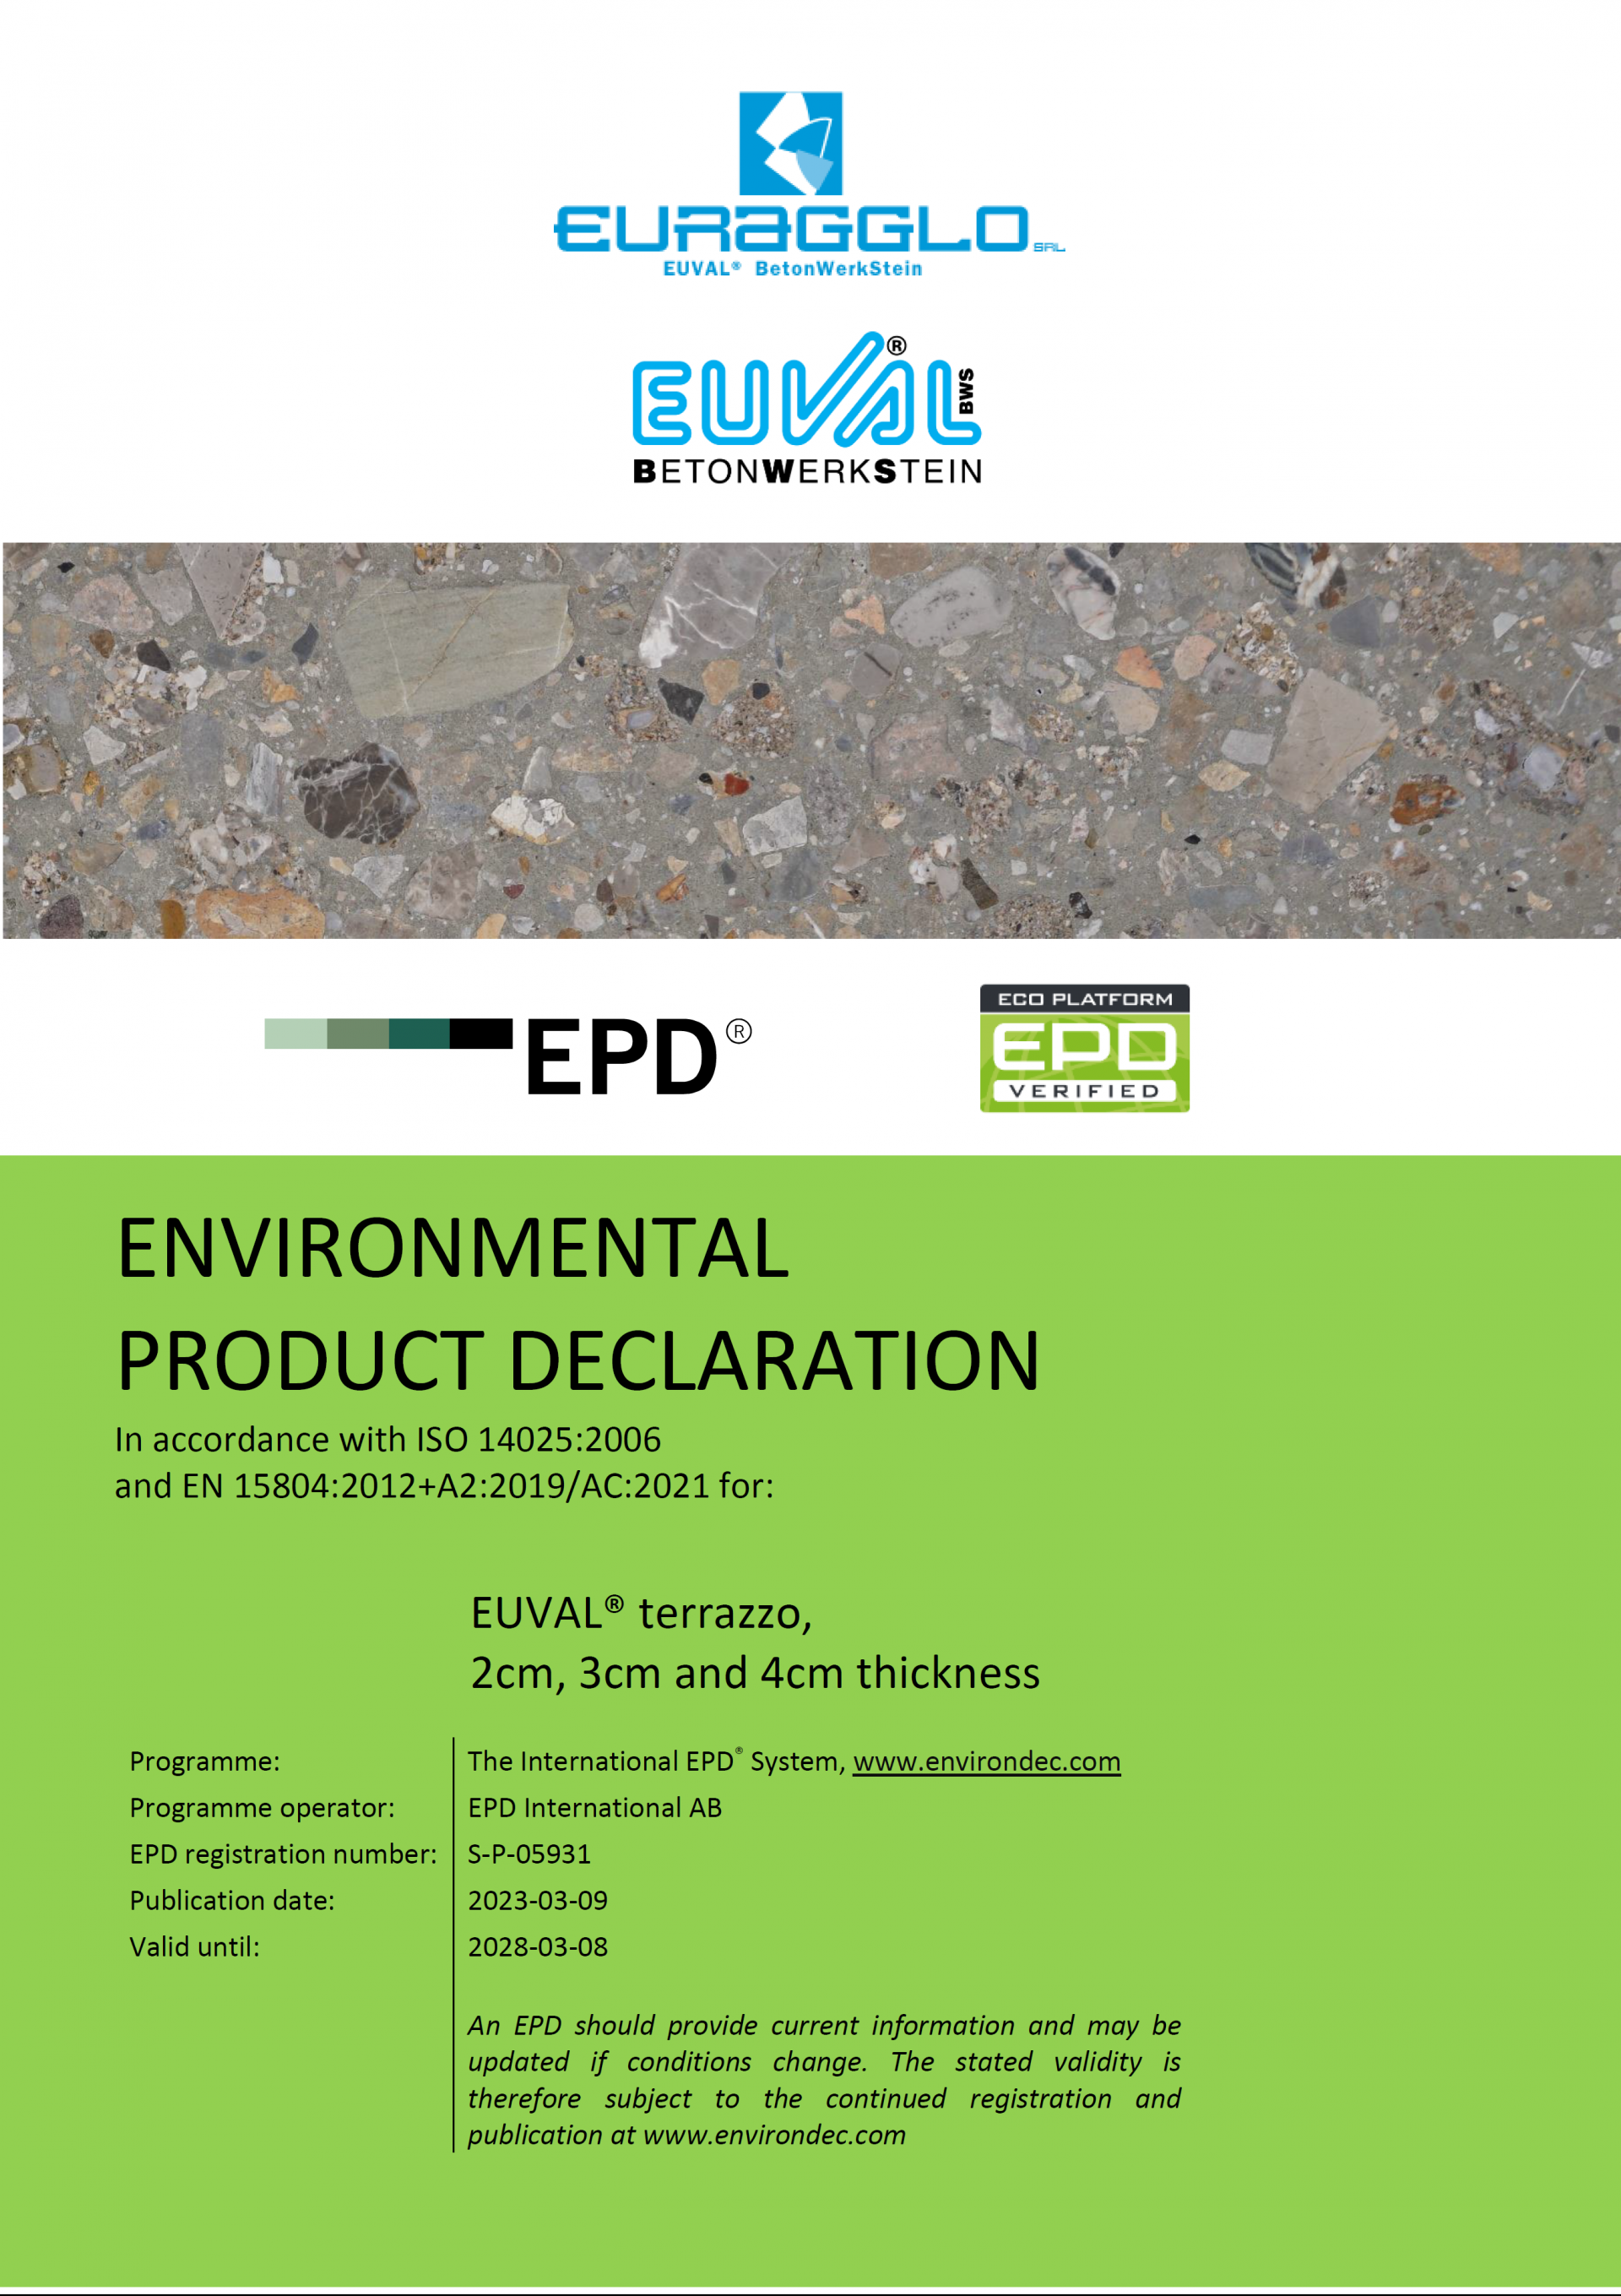 edp-declaration.png